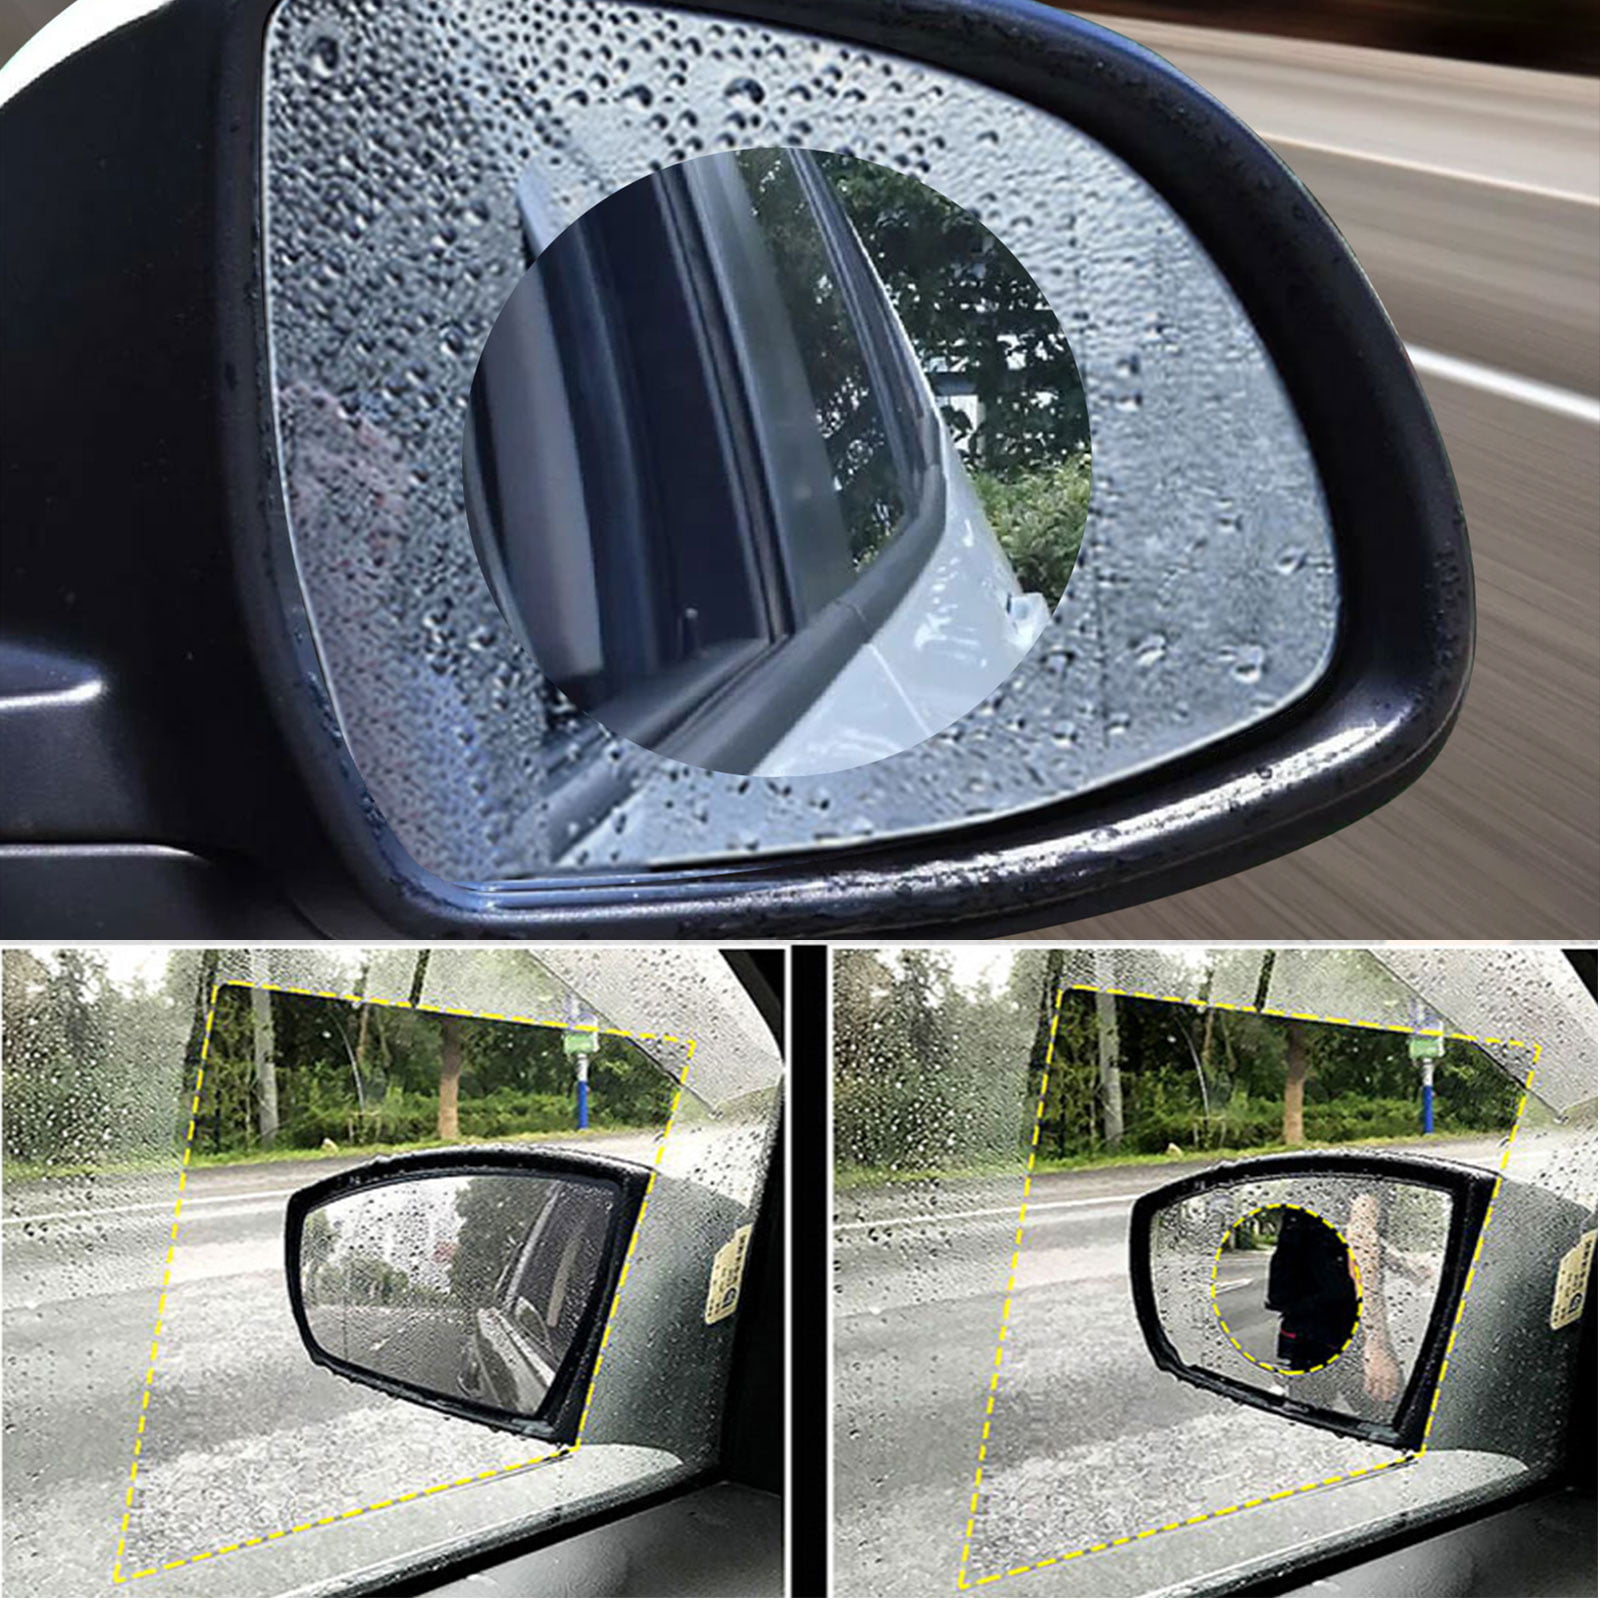 Fog Film for Car Door Wing Mirrors Rainproof Waterproof Repels Water Anti Mist 